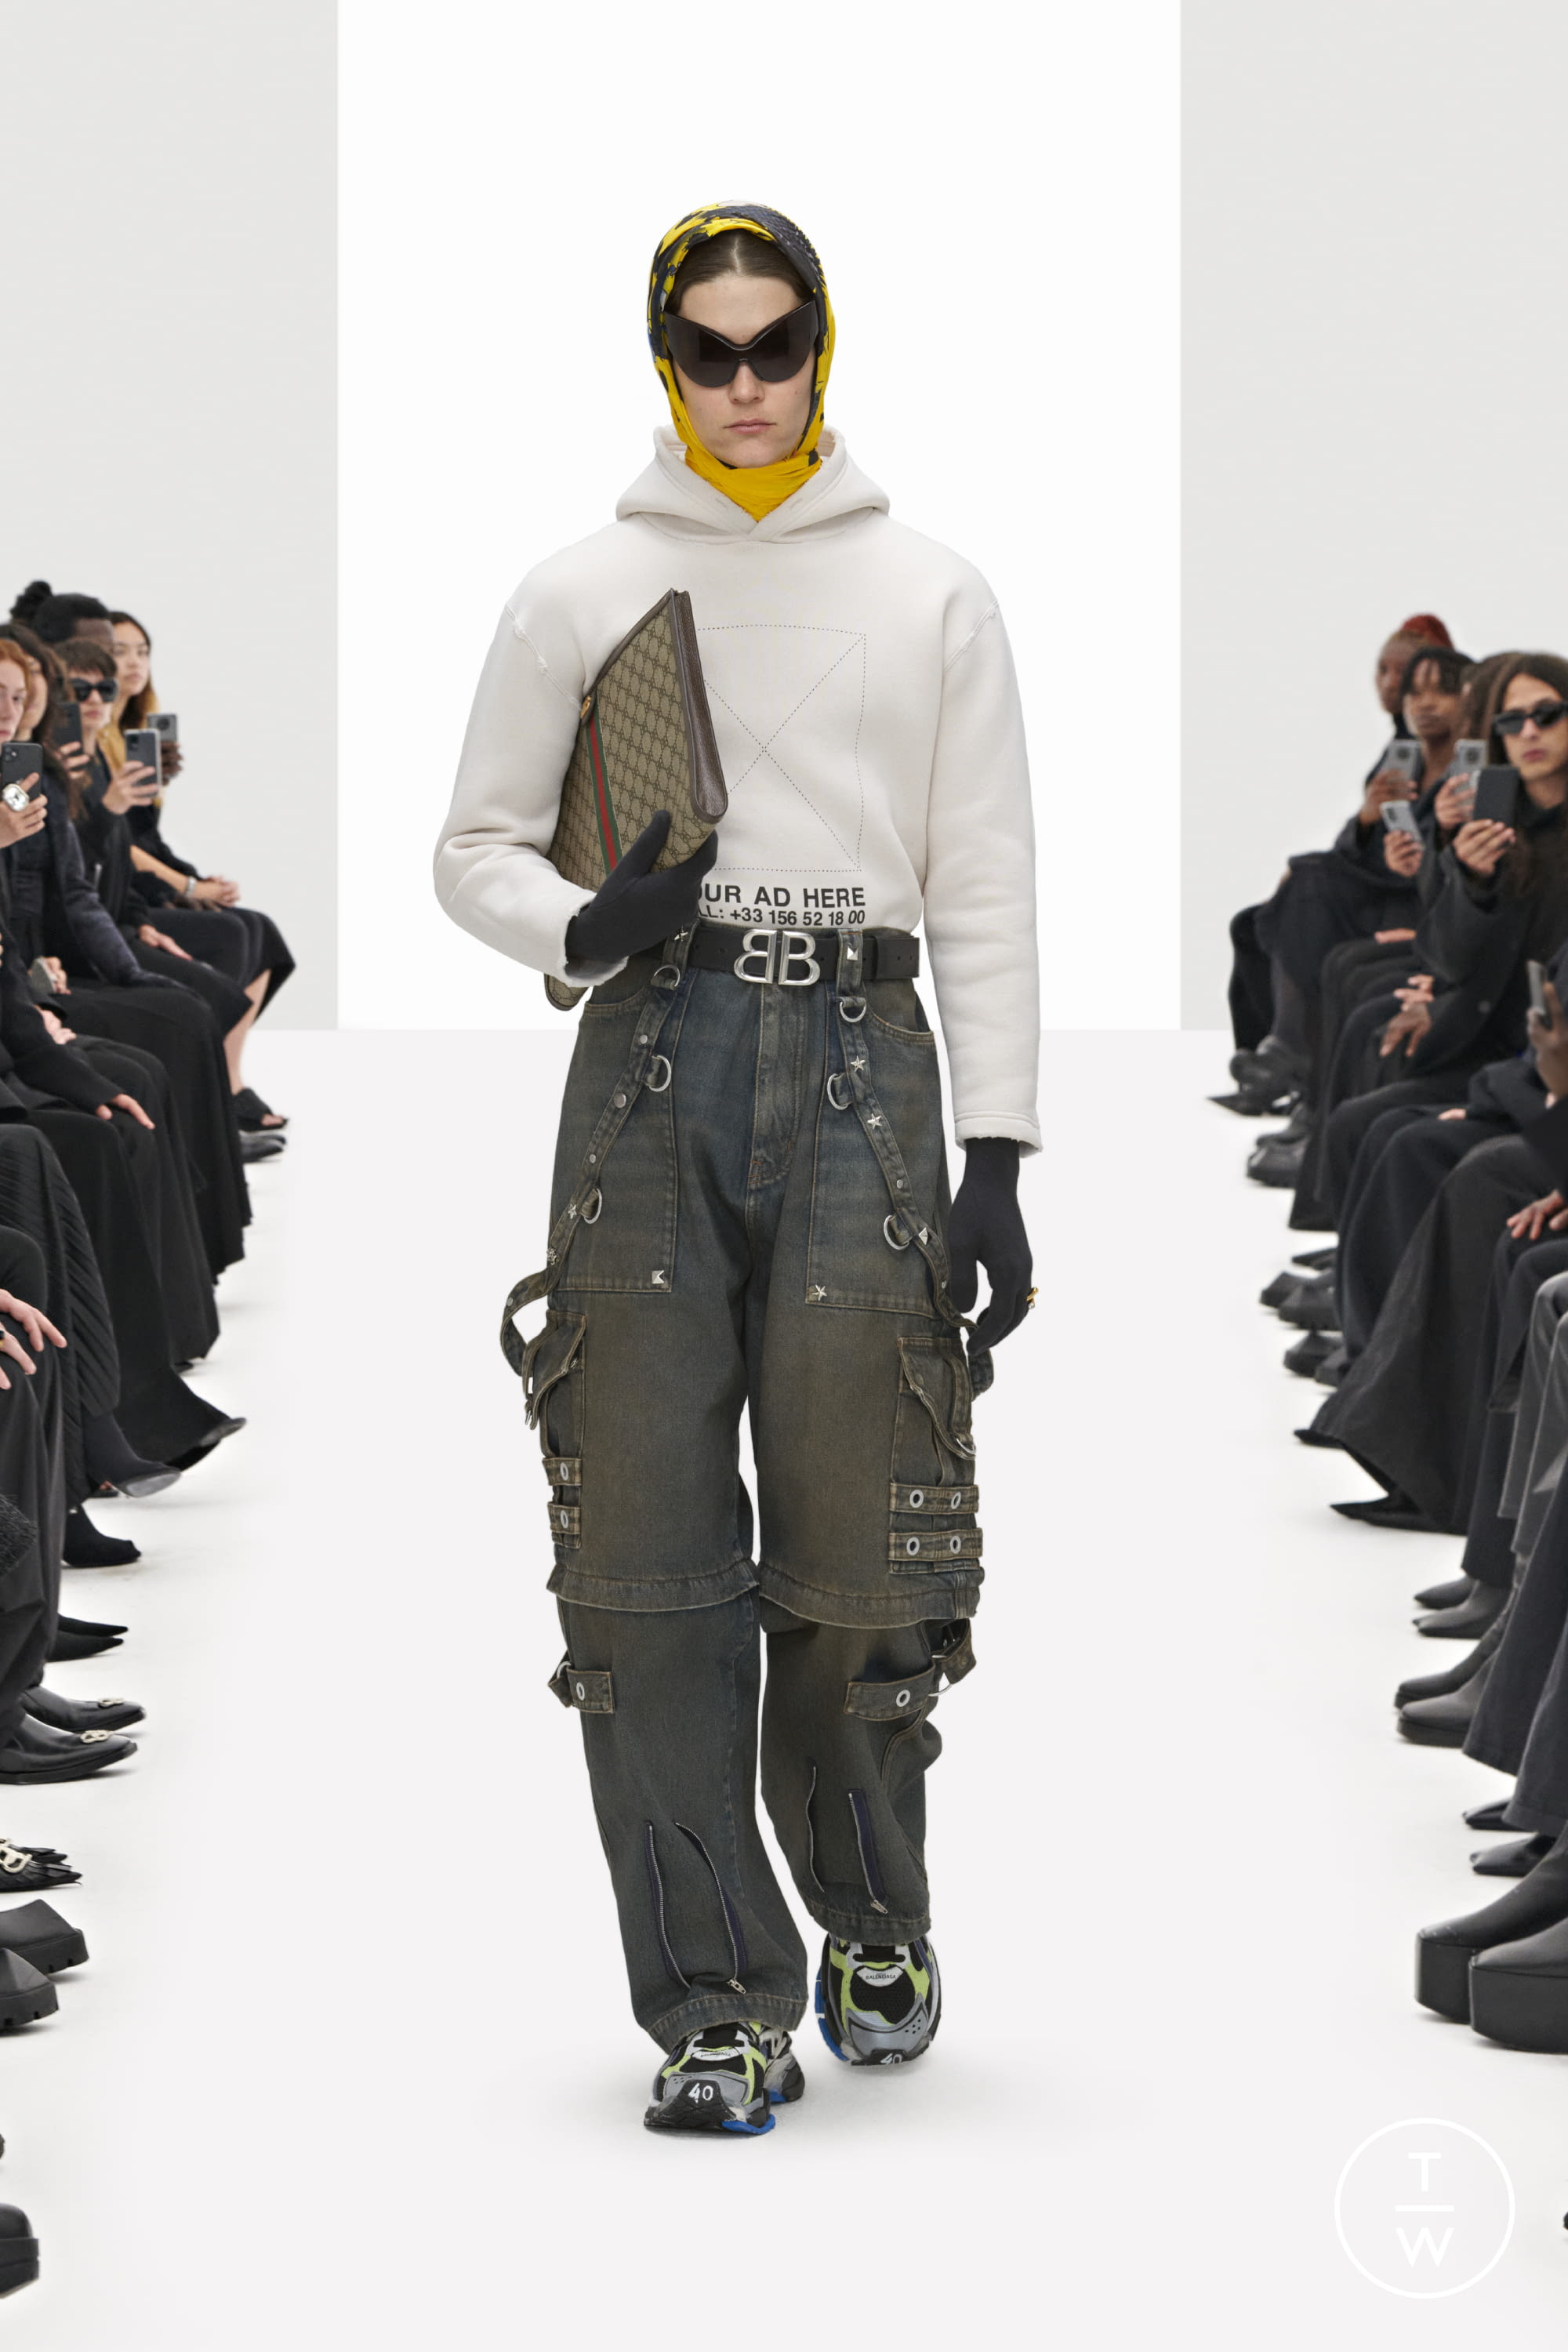 Ralph Lauren RE22 womenswear #23 - Tagwalk: The Fashion Search Engine